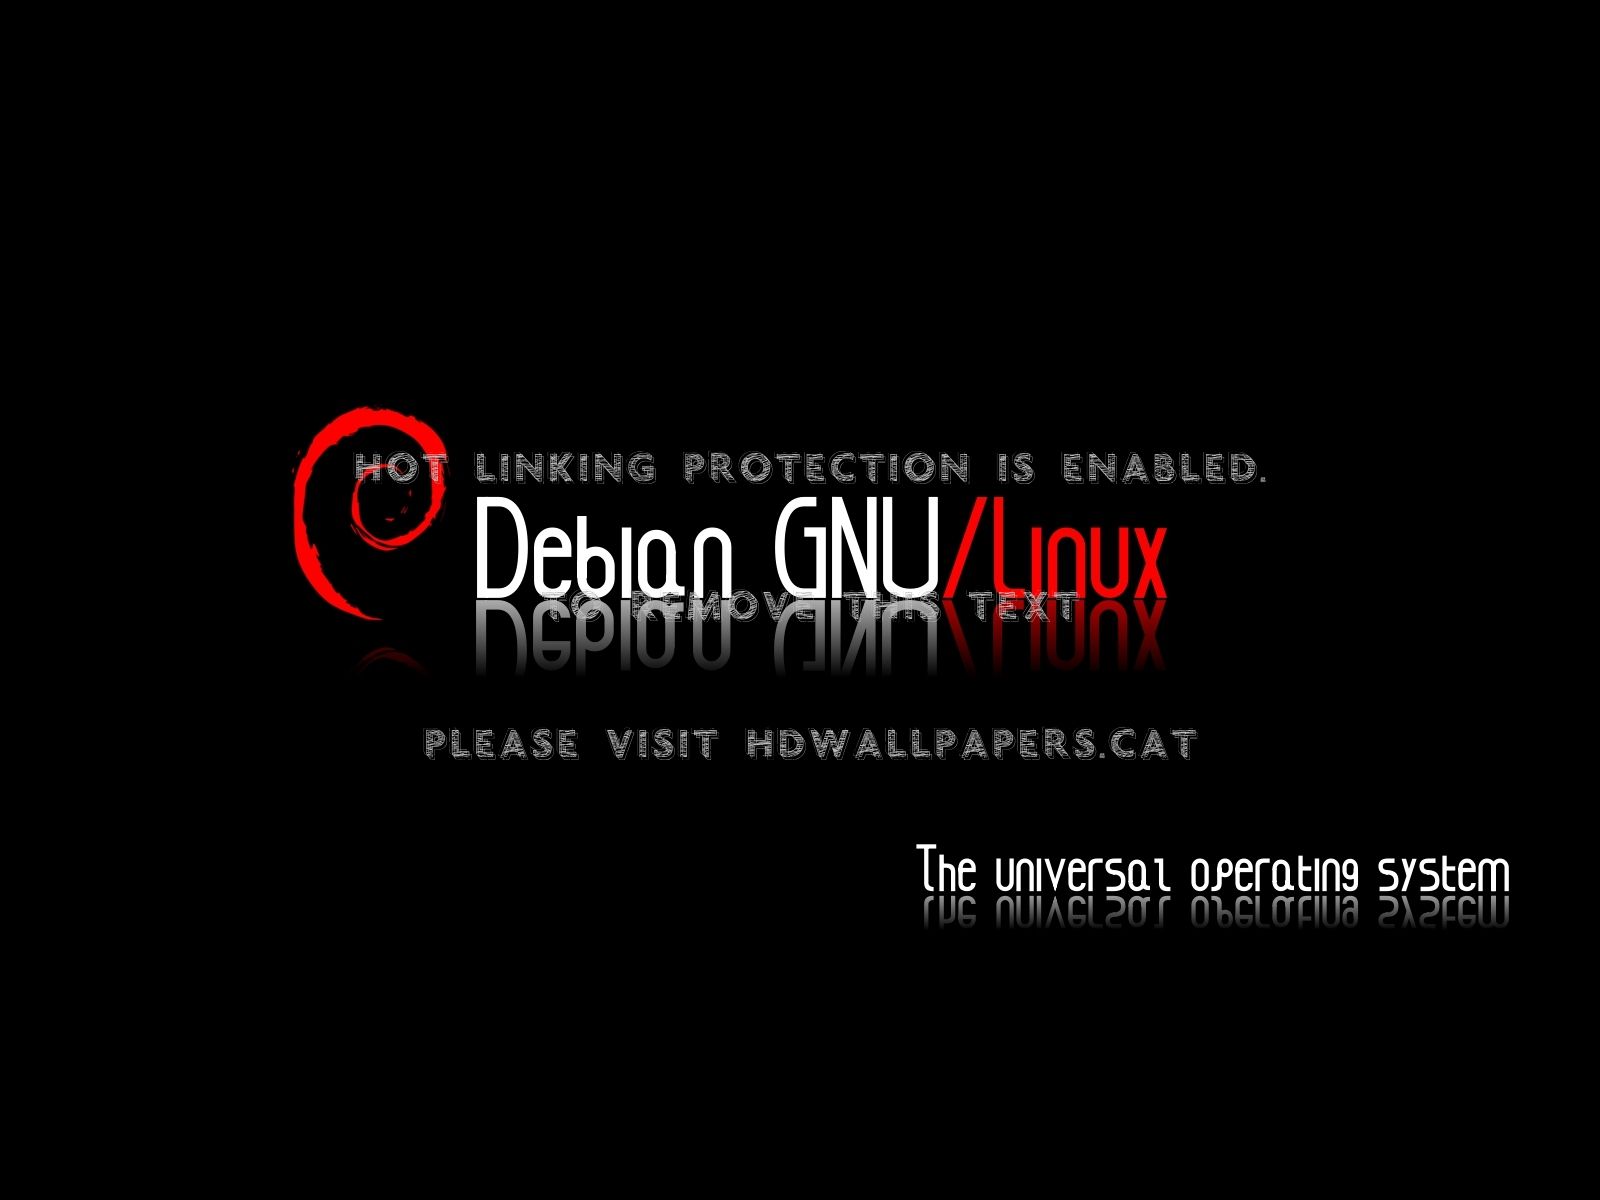 Debian Gnu Linux Wallpaper. GNU Snowboards Wallpaper, Debian Gnu Linux Wallpaper and GNU Wallpaper